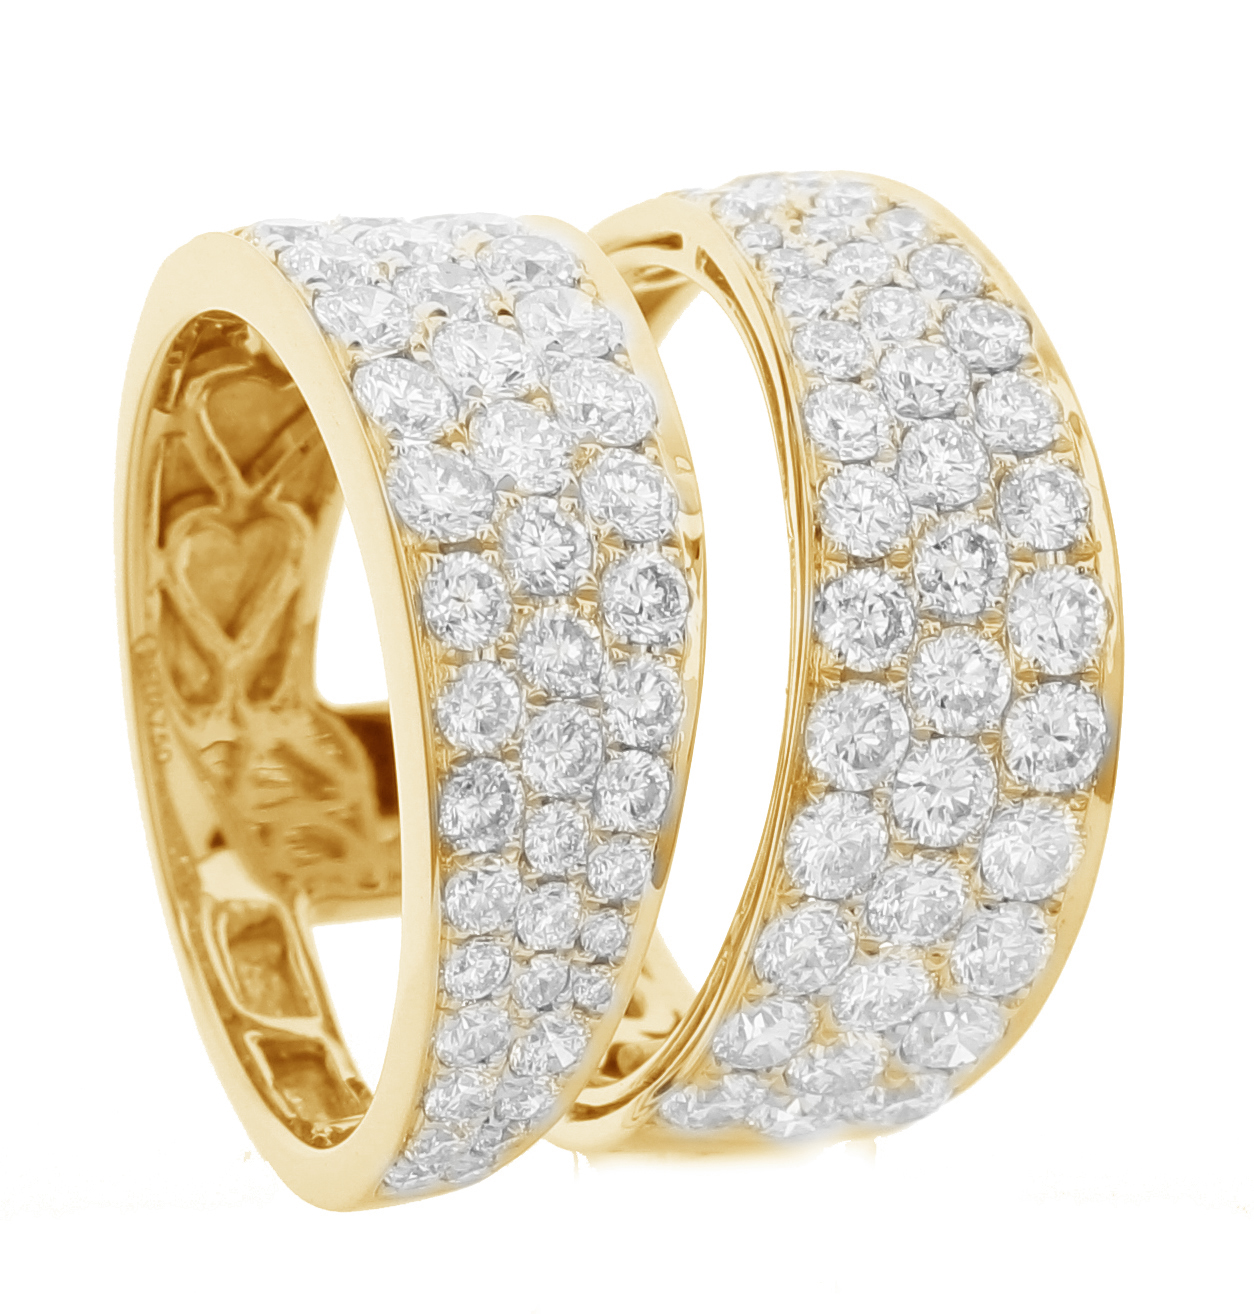 An 18k Yellow Gold Diamond Double Row Ring